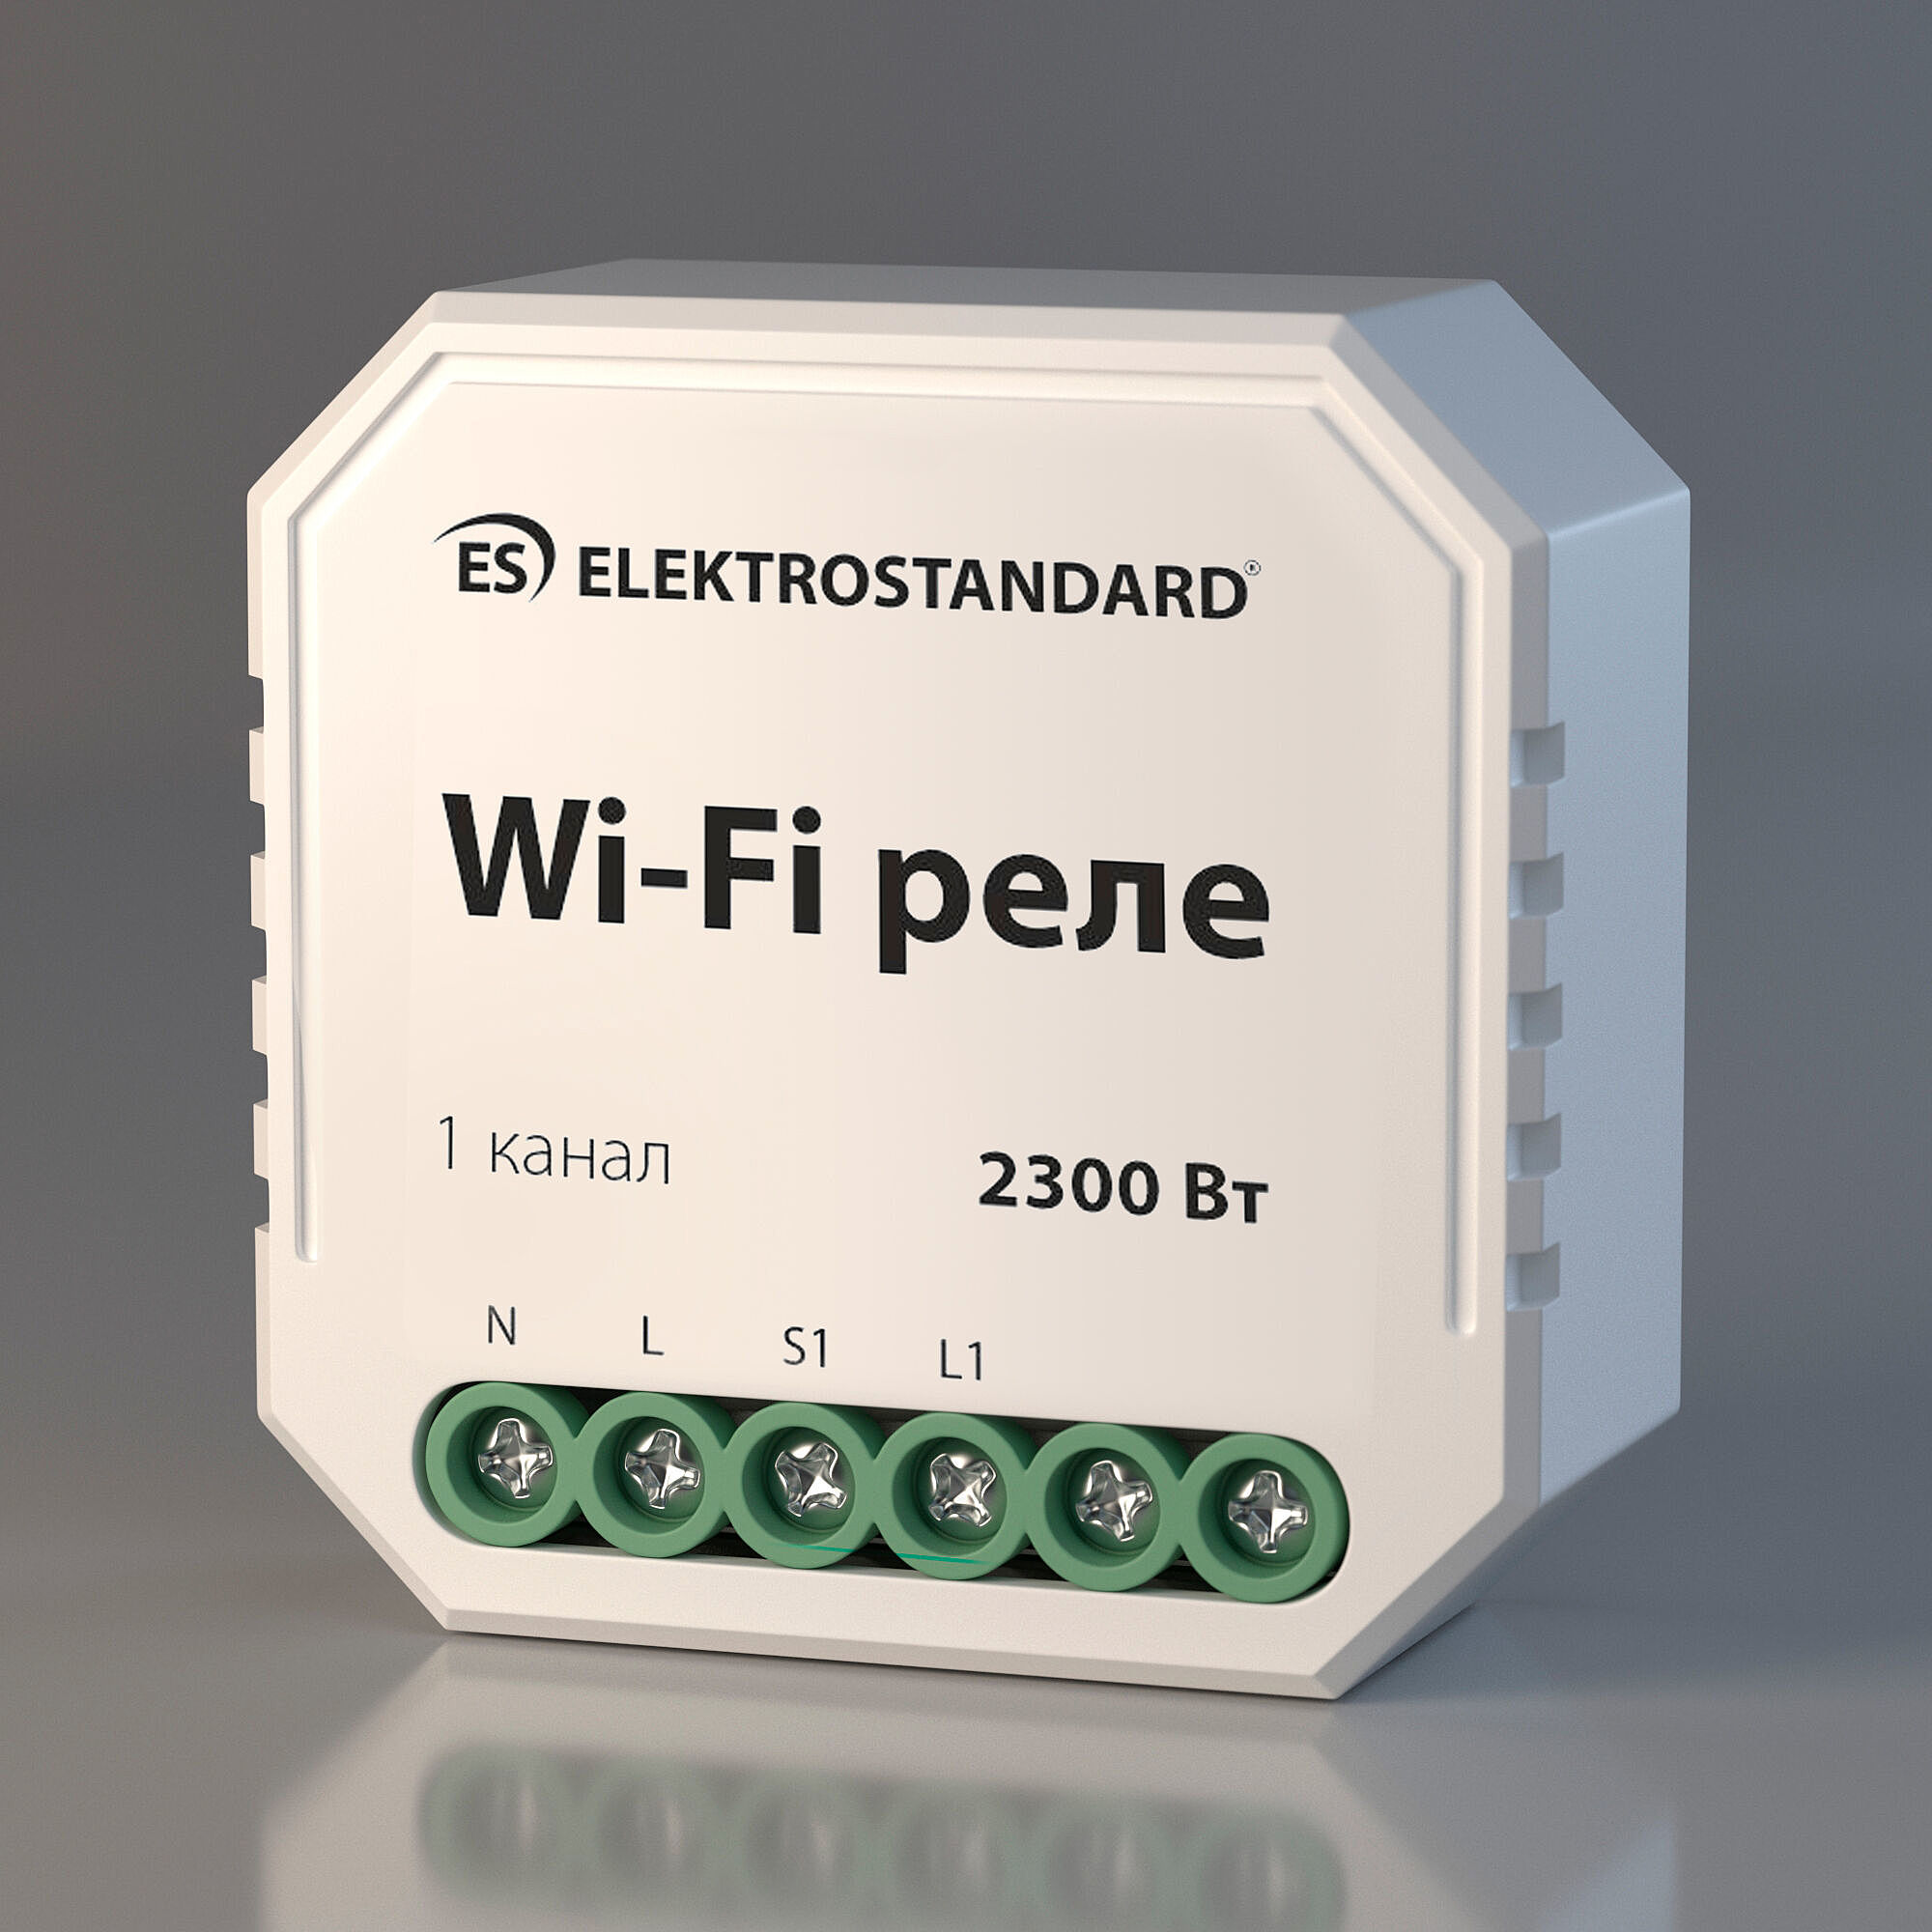 Wi-Fi реле Elektrostandard WF 76000/00 реле Умный дом